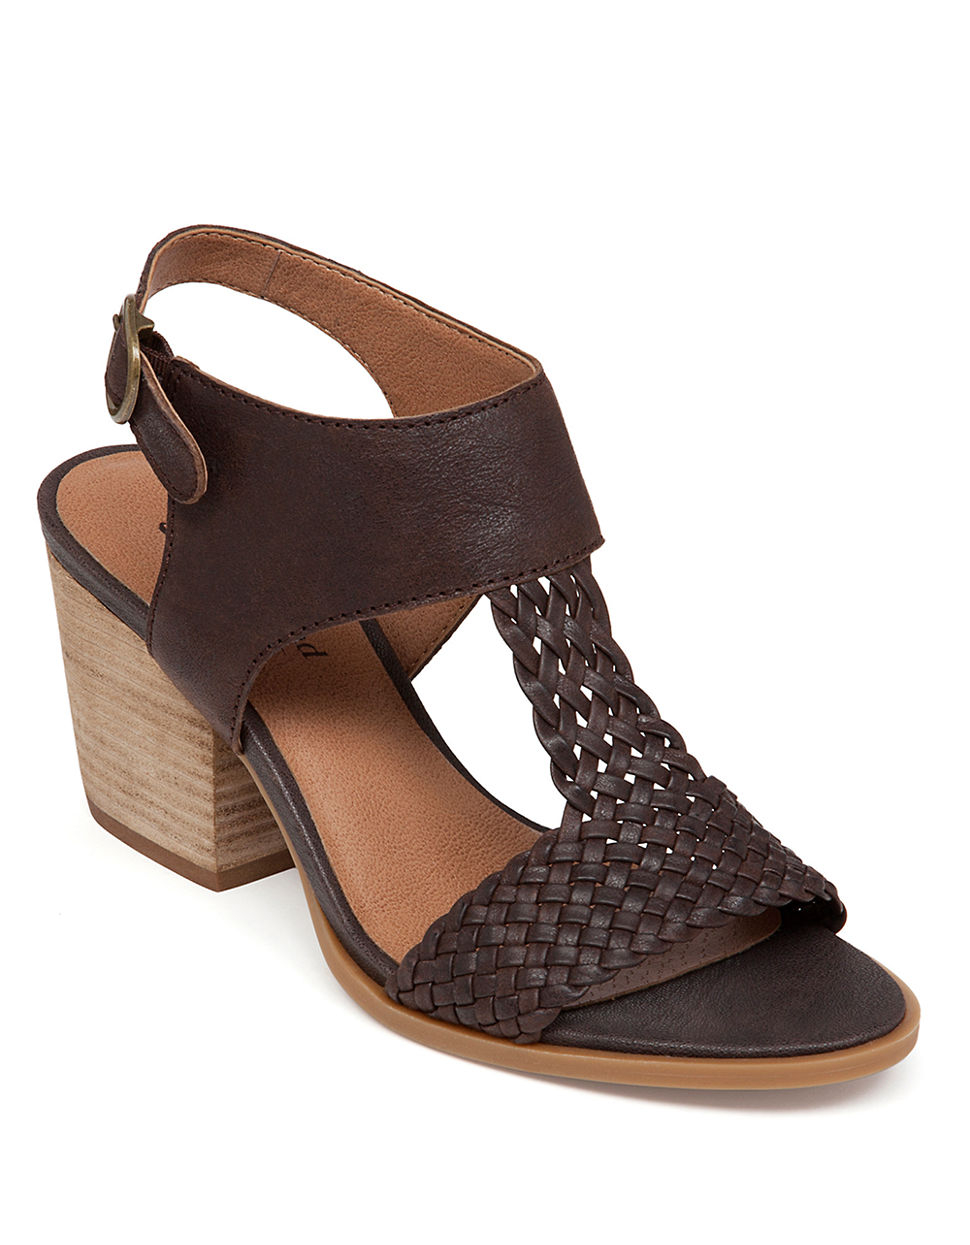 Lyst - Lucky brand Maari High-heel Leather Sandals in Brown